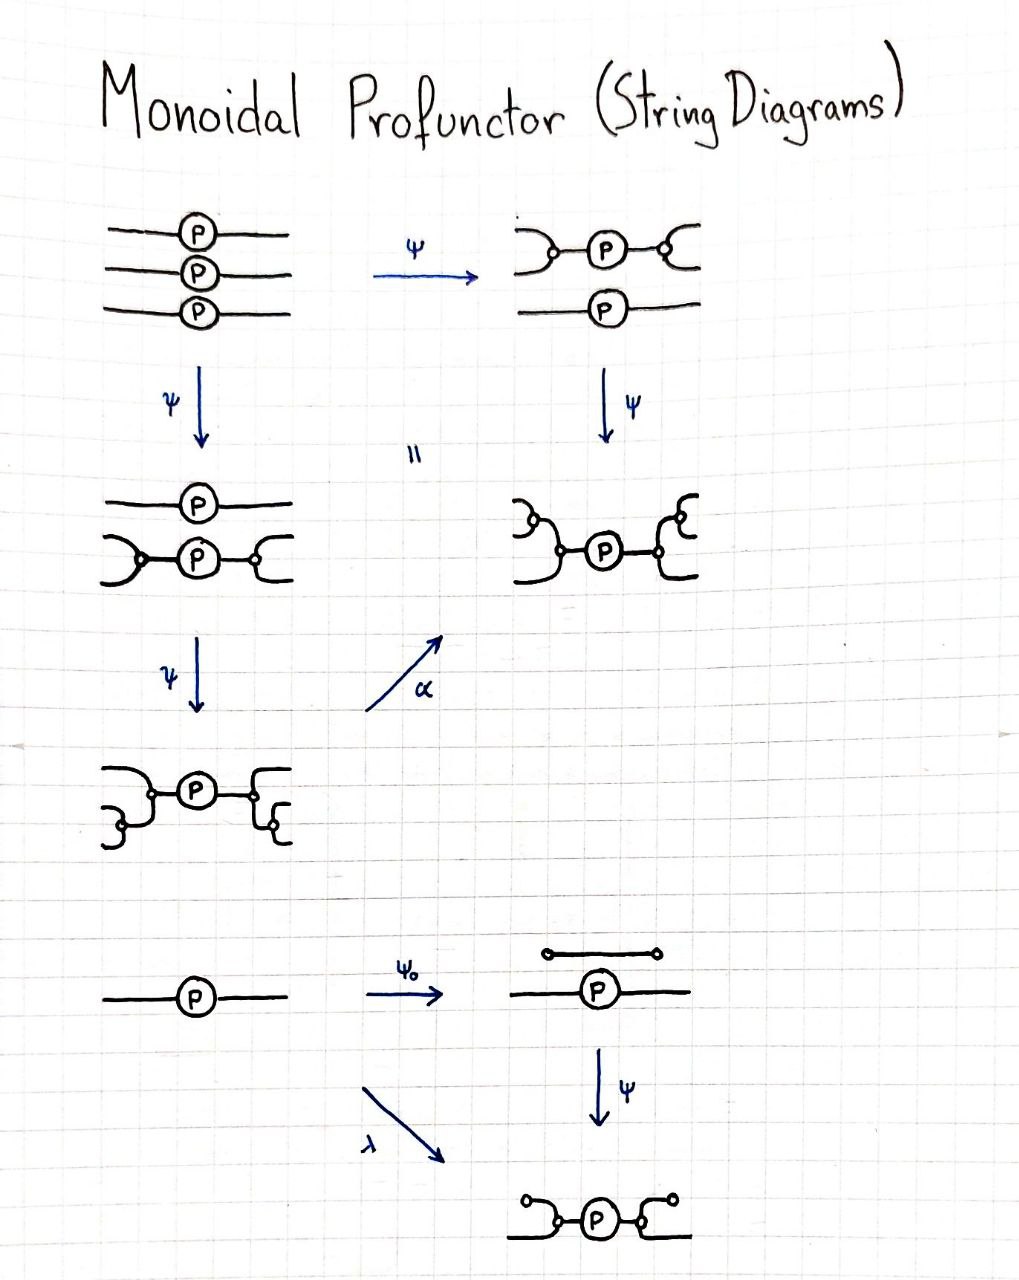 monoidal-profunctor-string-diagrams